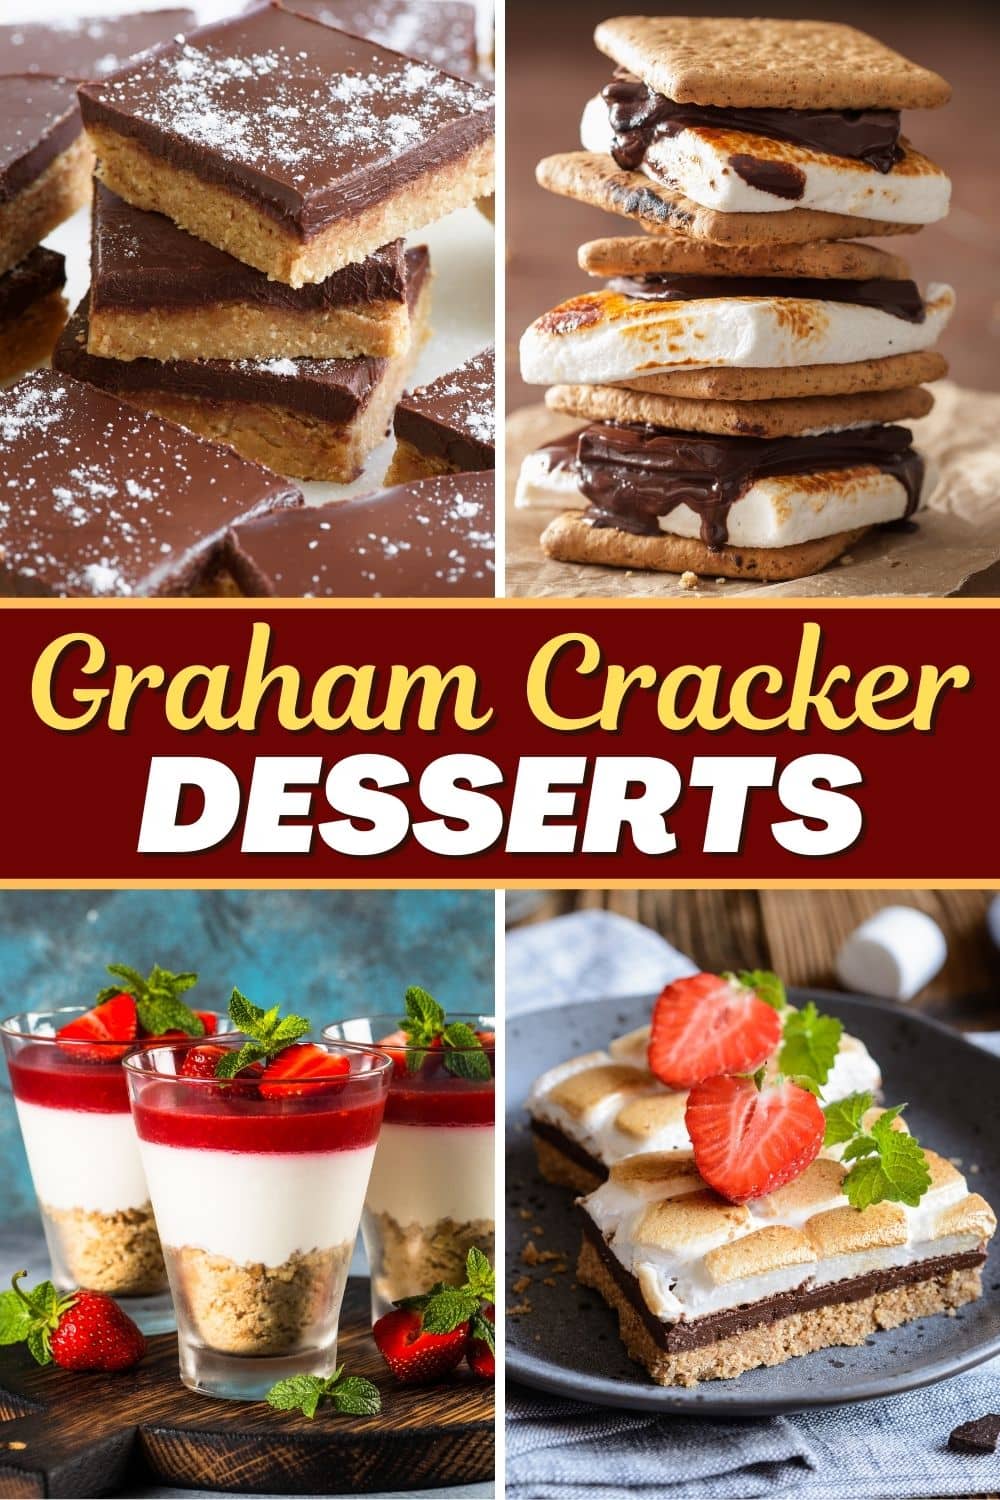 Top 20 Graham Cracker Desserts (+ Easy Recipes) - Insanely Good